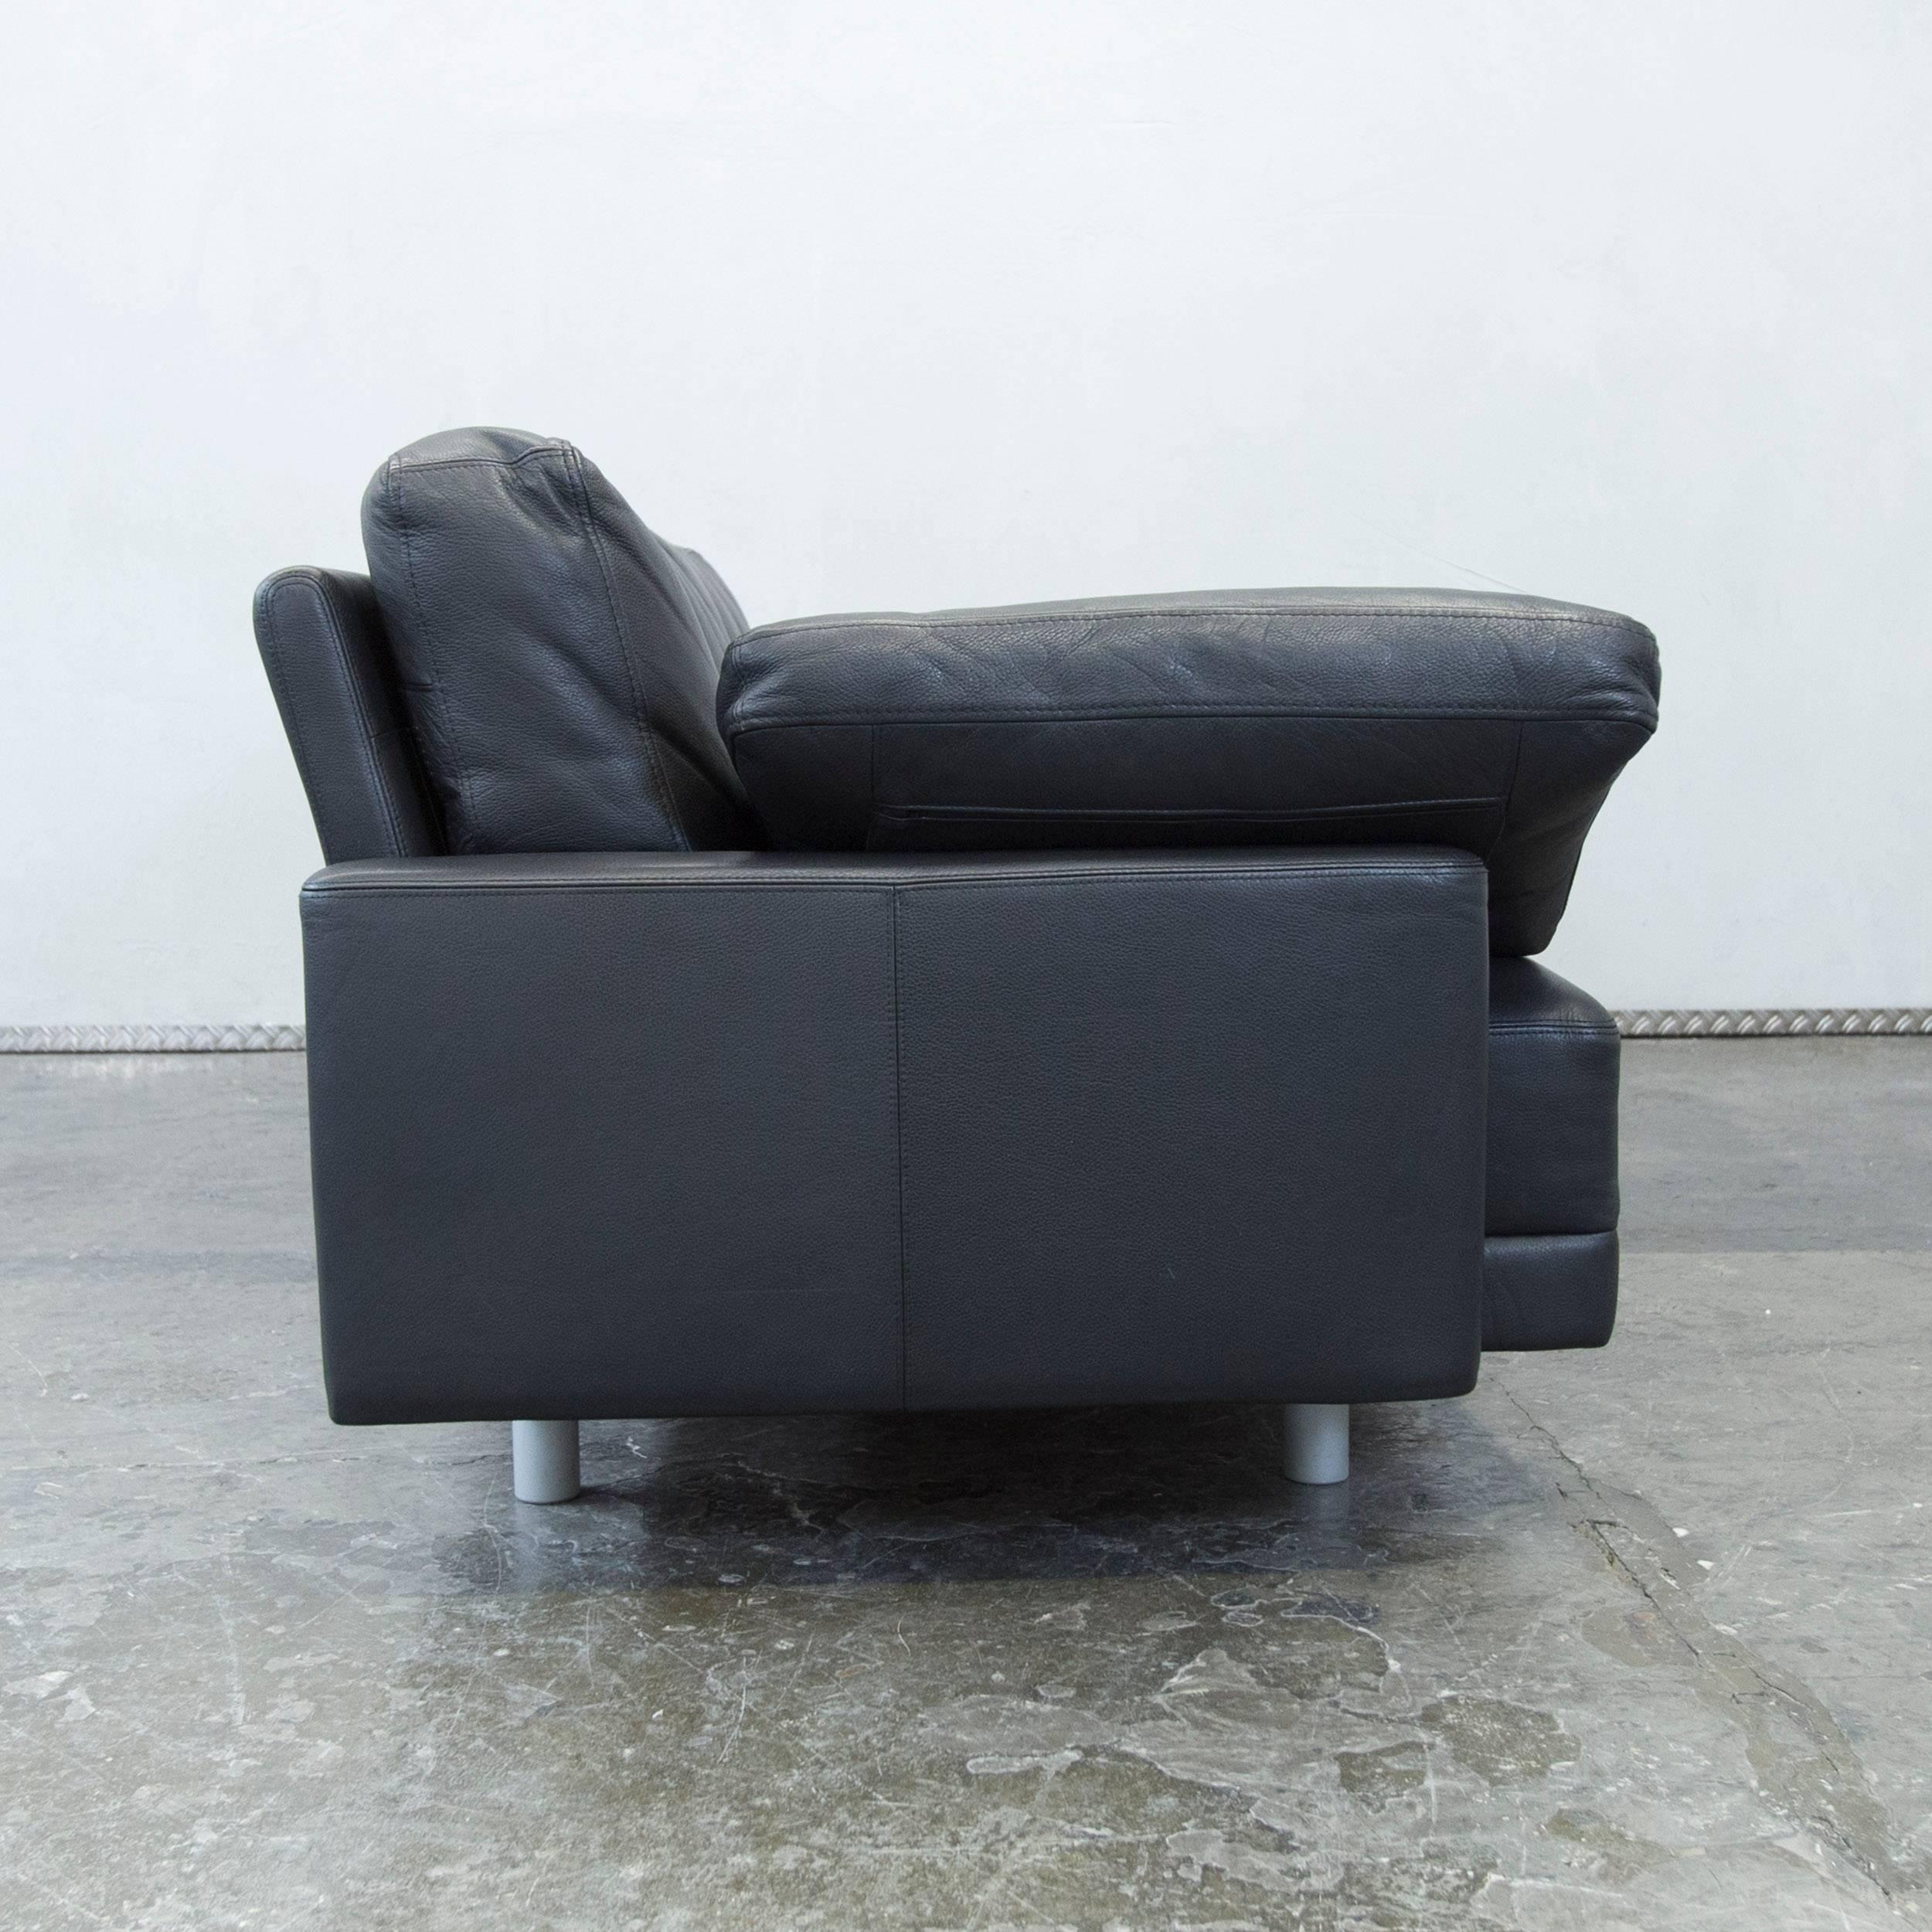 Brühl Alba Designer Leather Sofa Black Three-seat Couch Modern For Sale 3